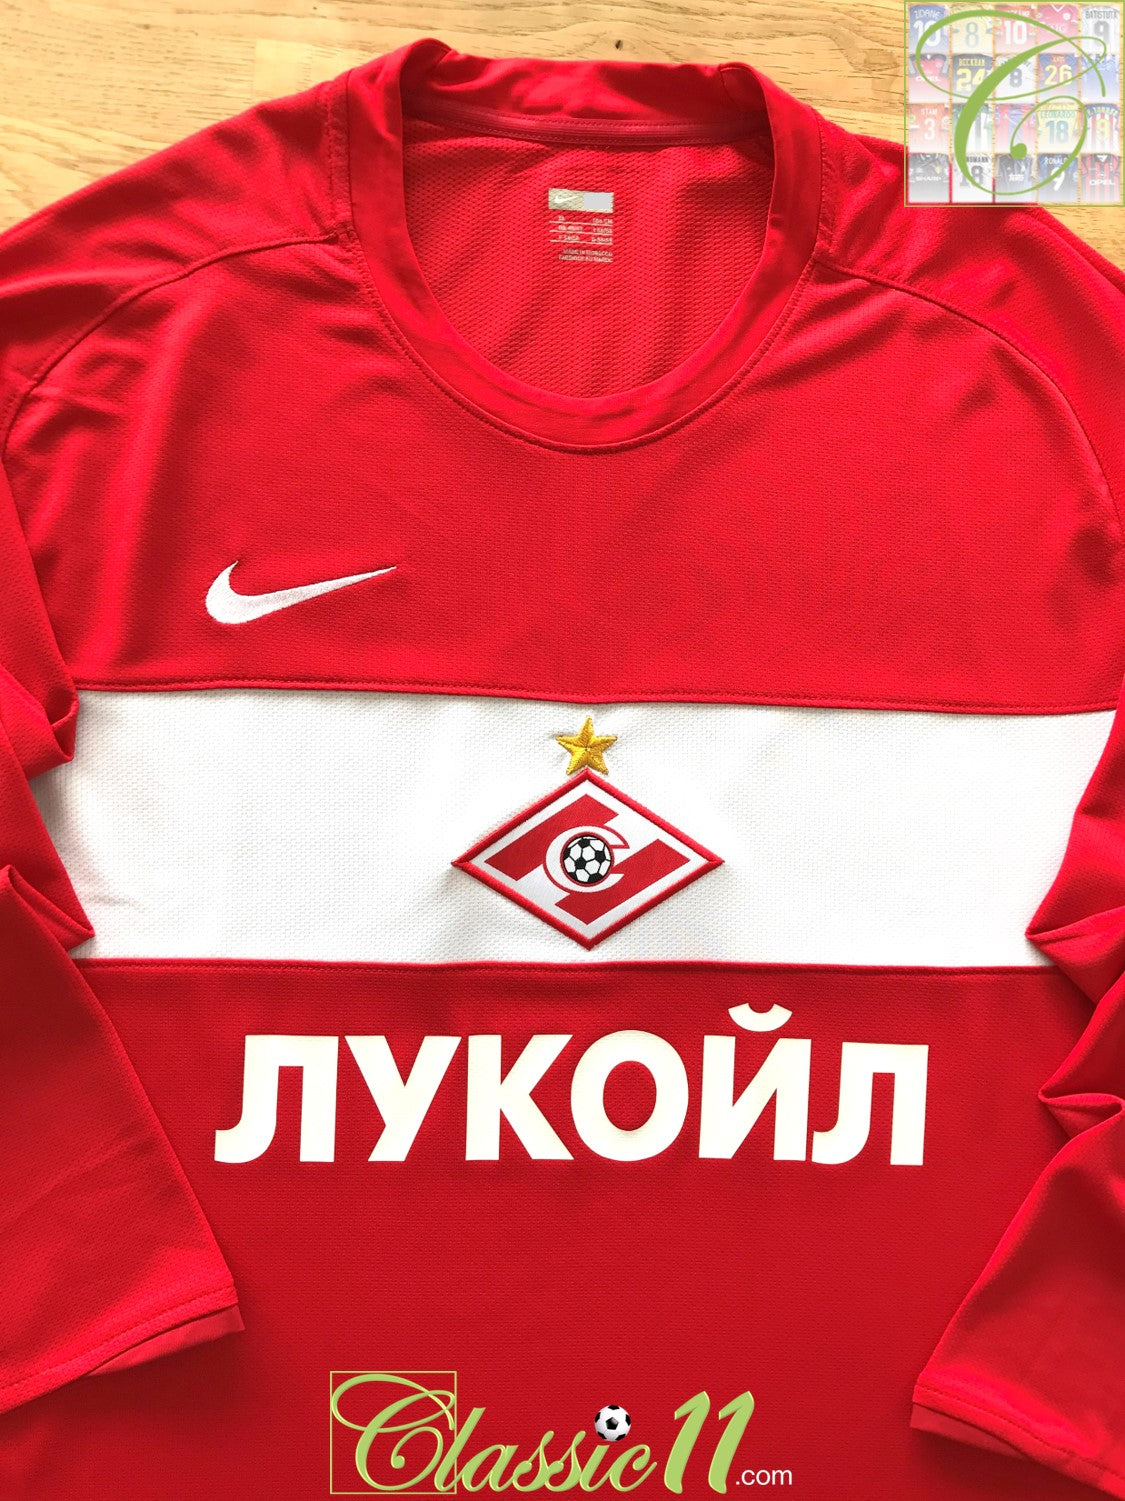 SPARTAK MOSCOW FOOTBALL SHIRT NIKE ORIGINAL JERSEY SIZE L